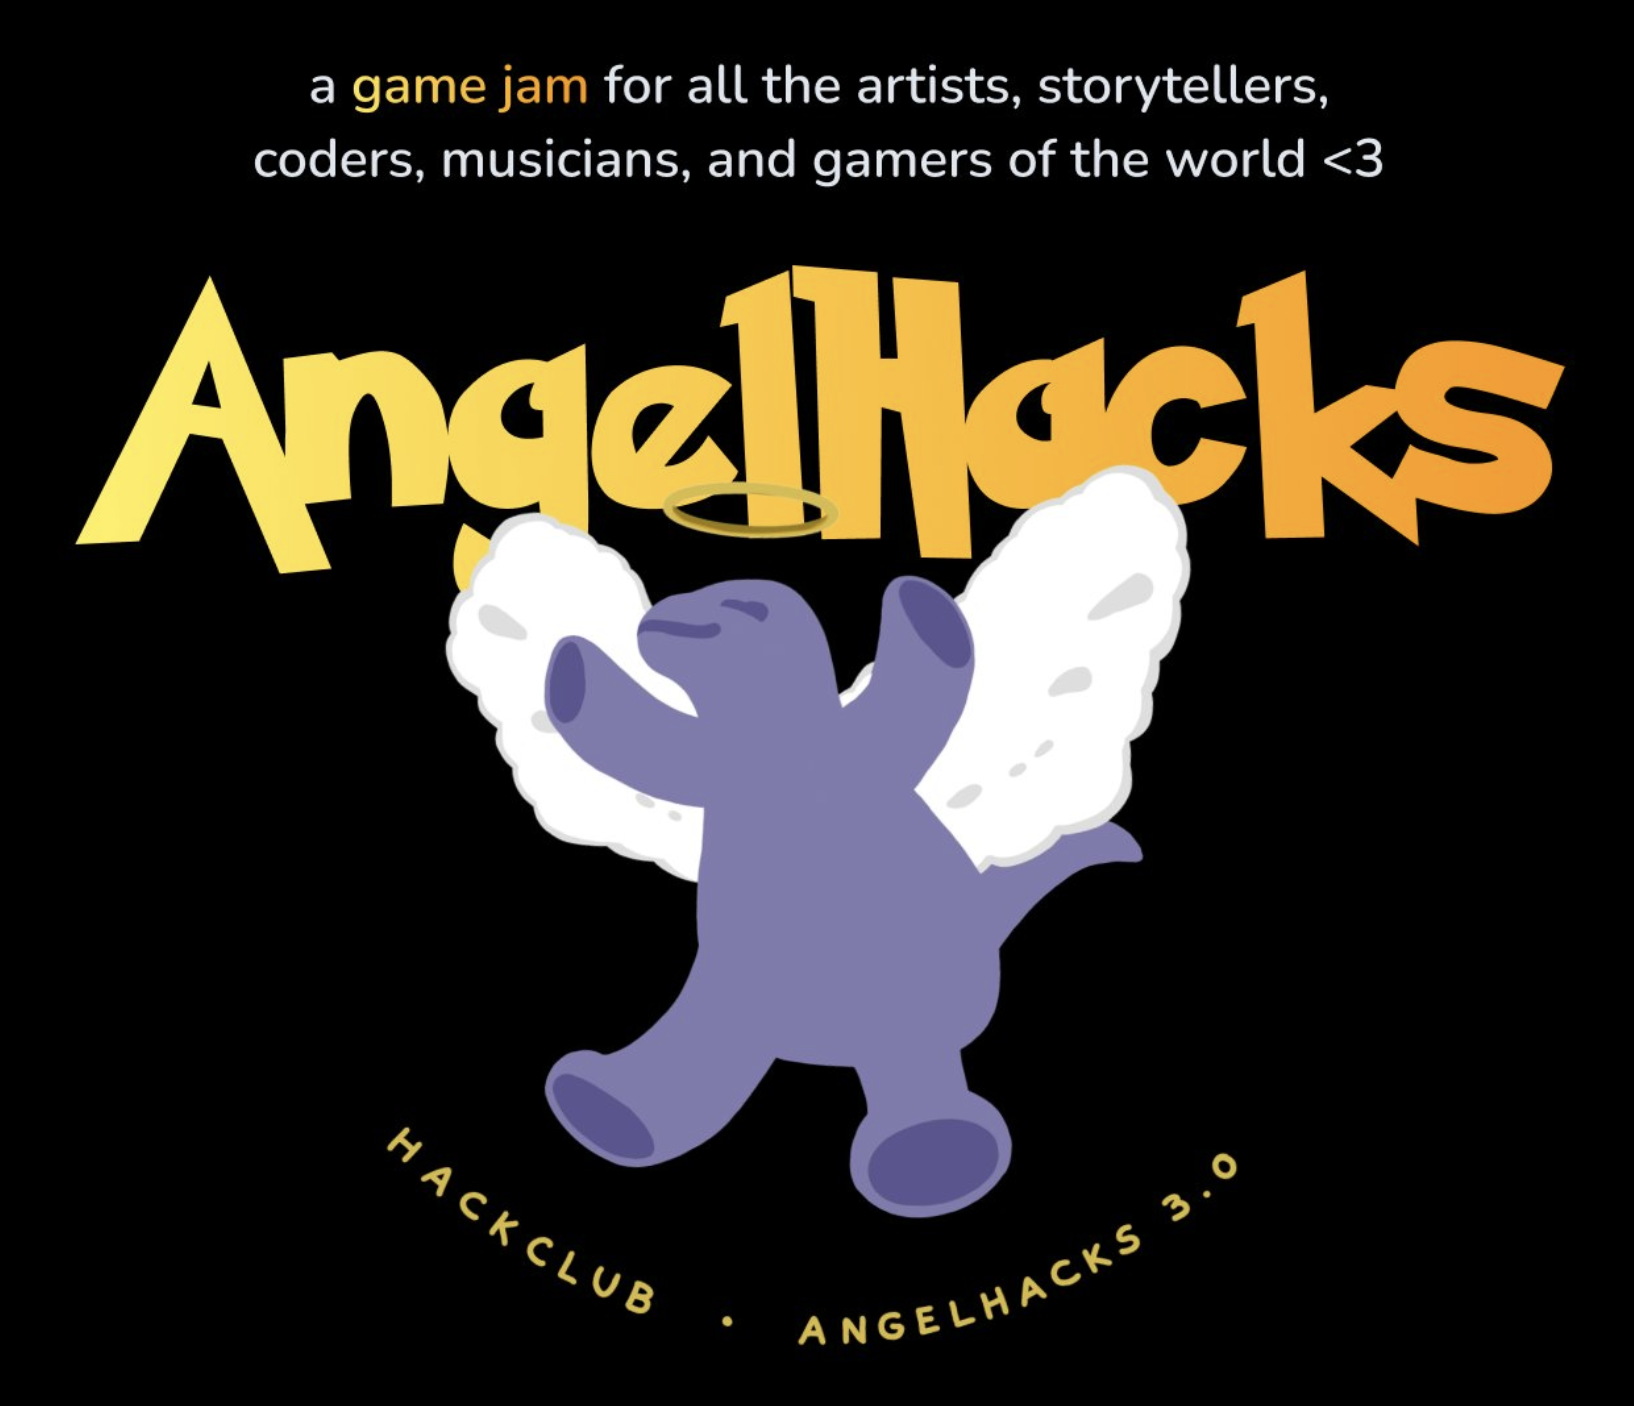 Angelhacks